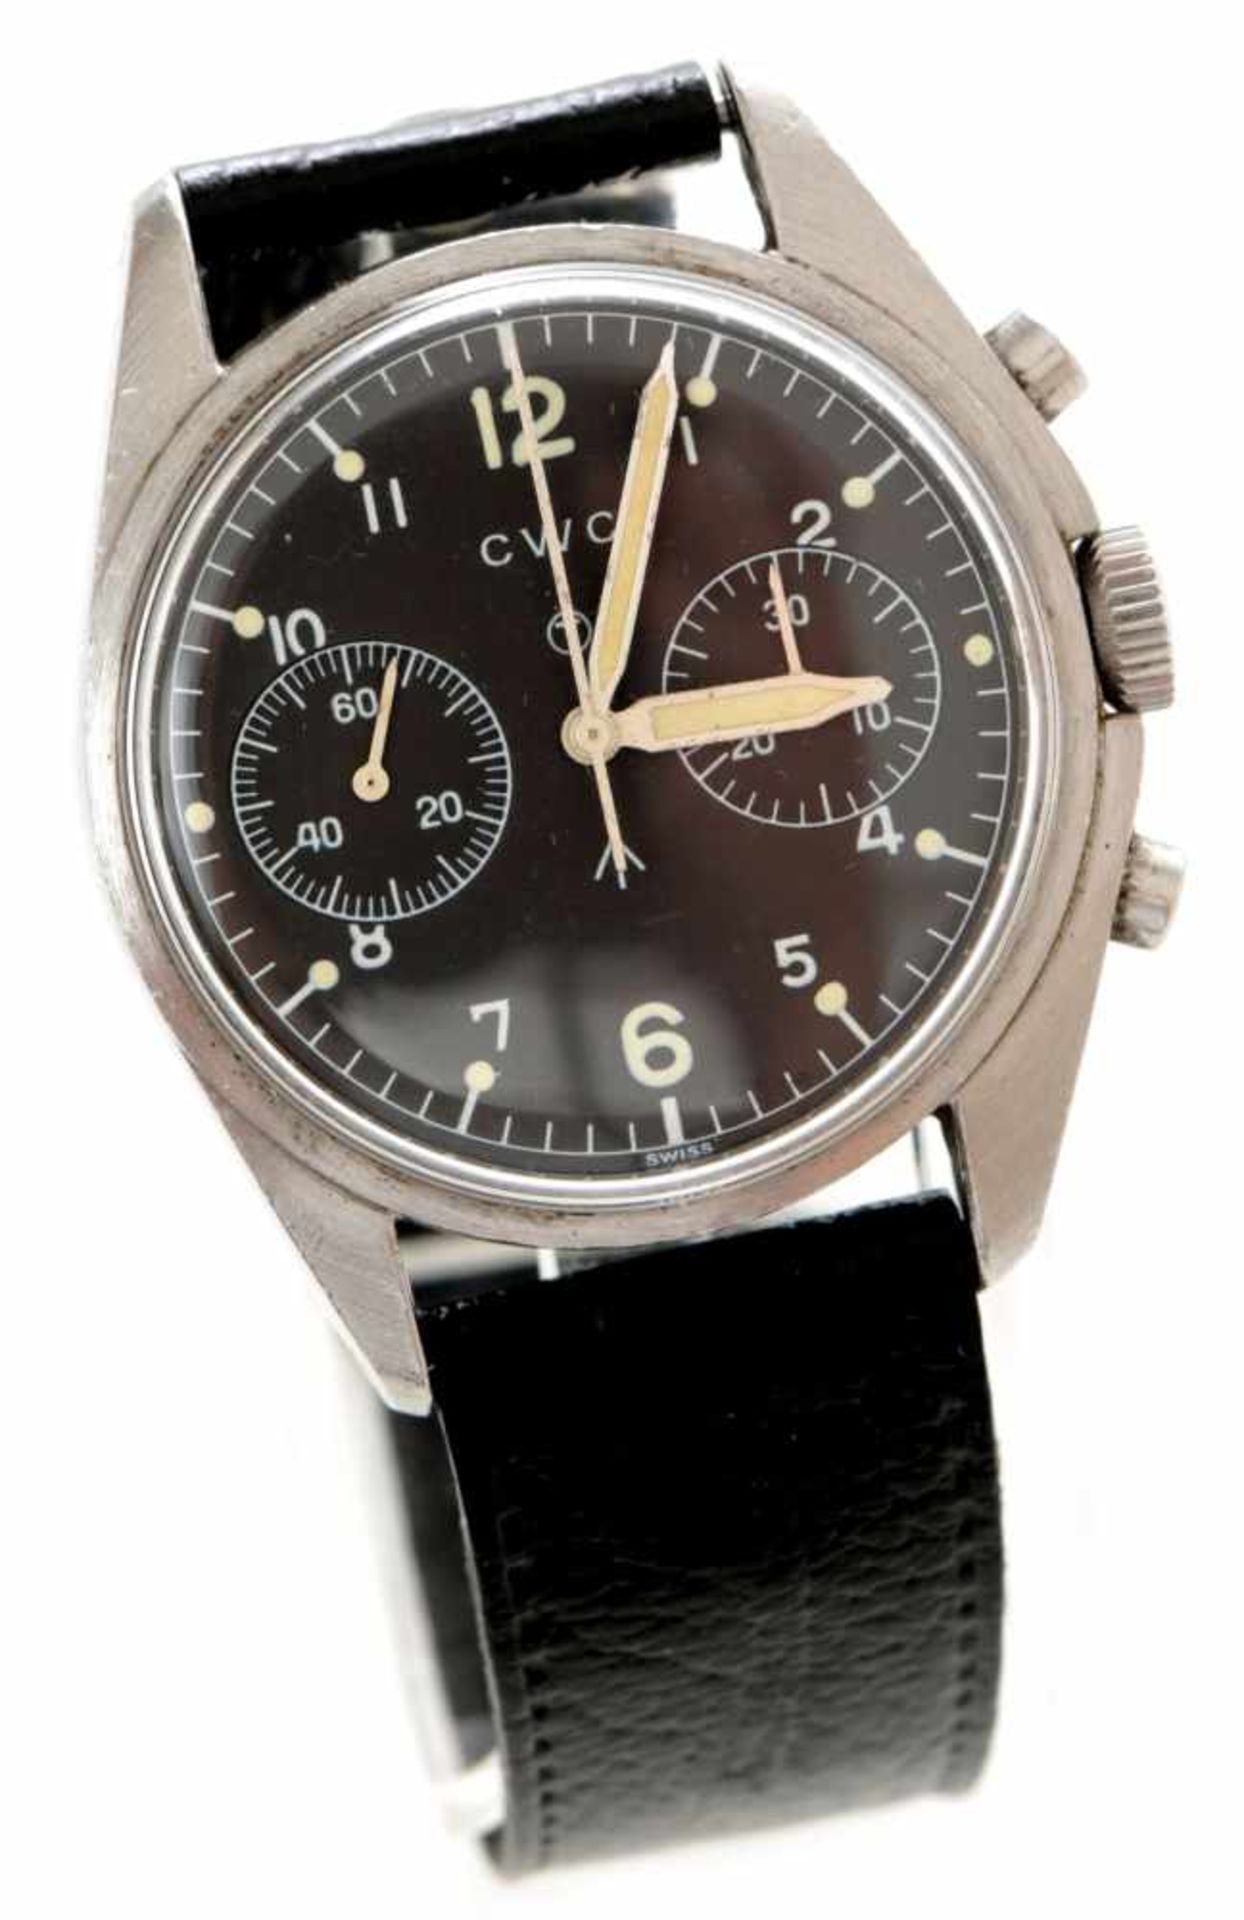 Militär-ArmbanduhrMetall weiß, CWC, 20.Jh. Chronograph, schwarzes Zifferbl. m. luminesz. arab.